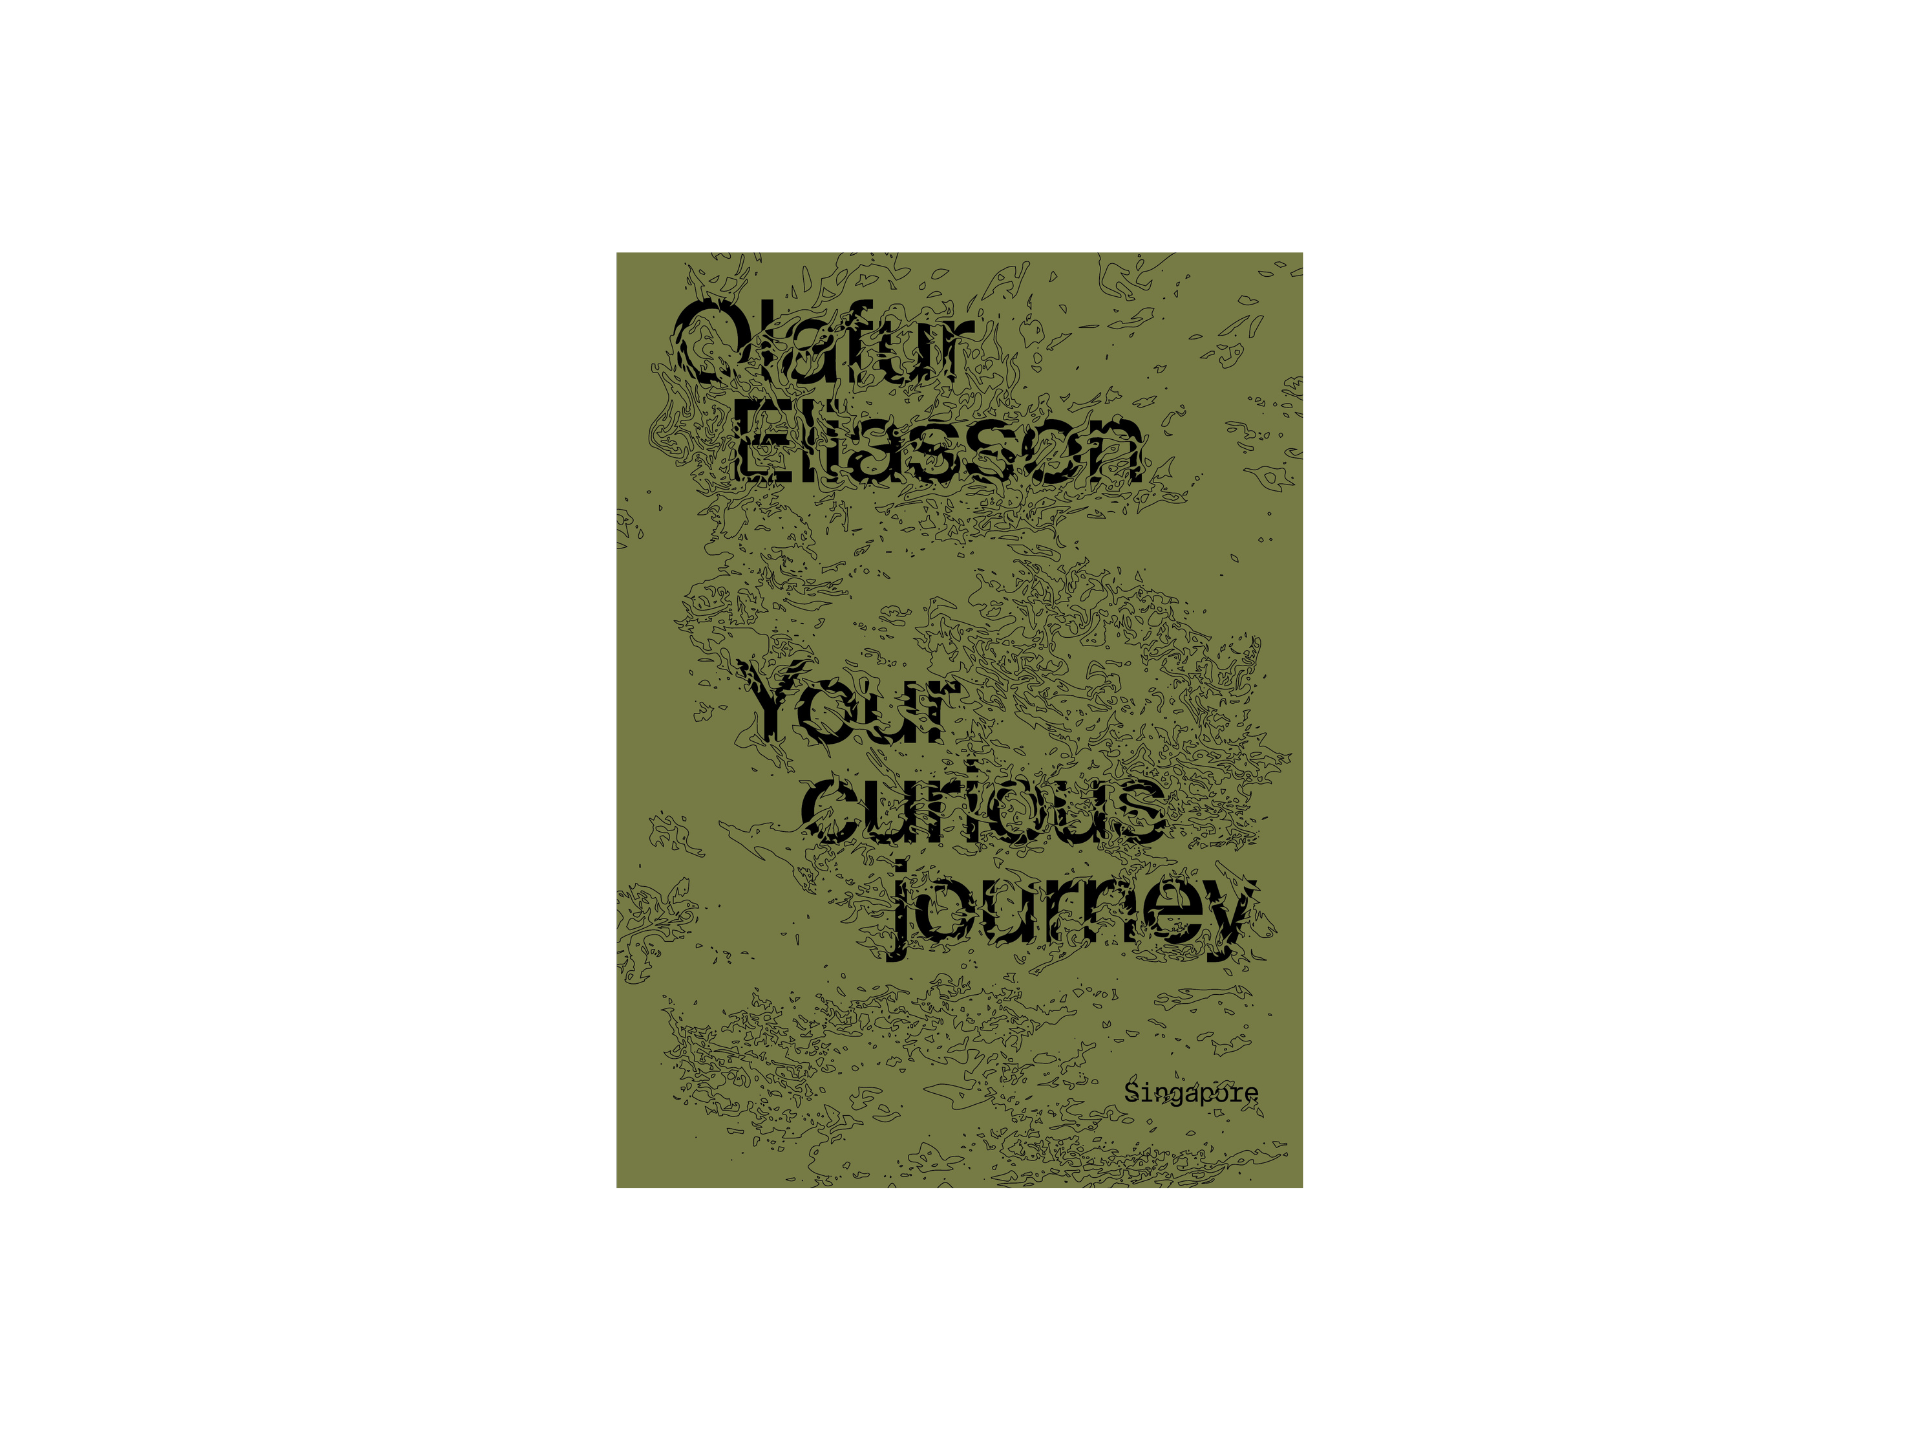 Olafur Eliasson: Your curious journey — Singapore exhibition catalogue 